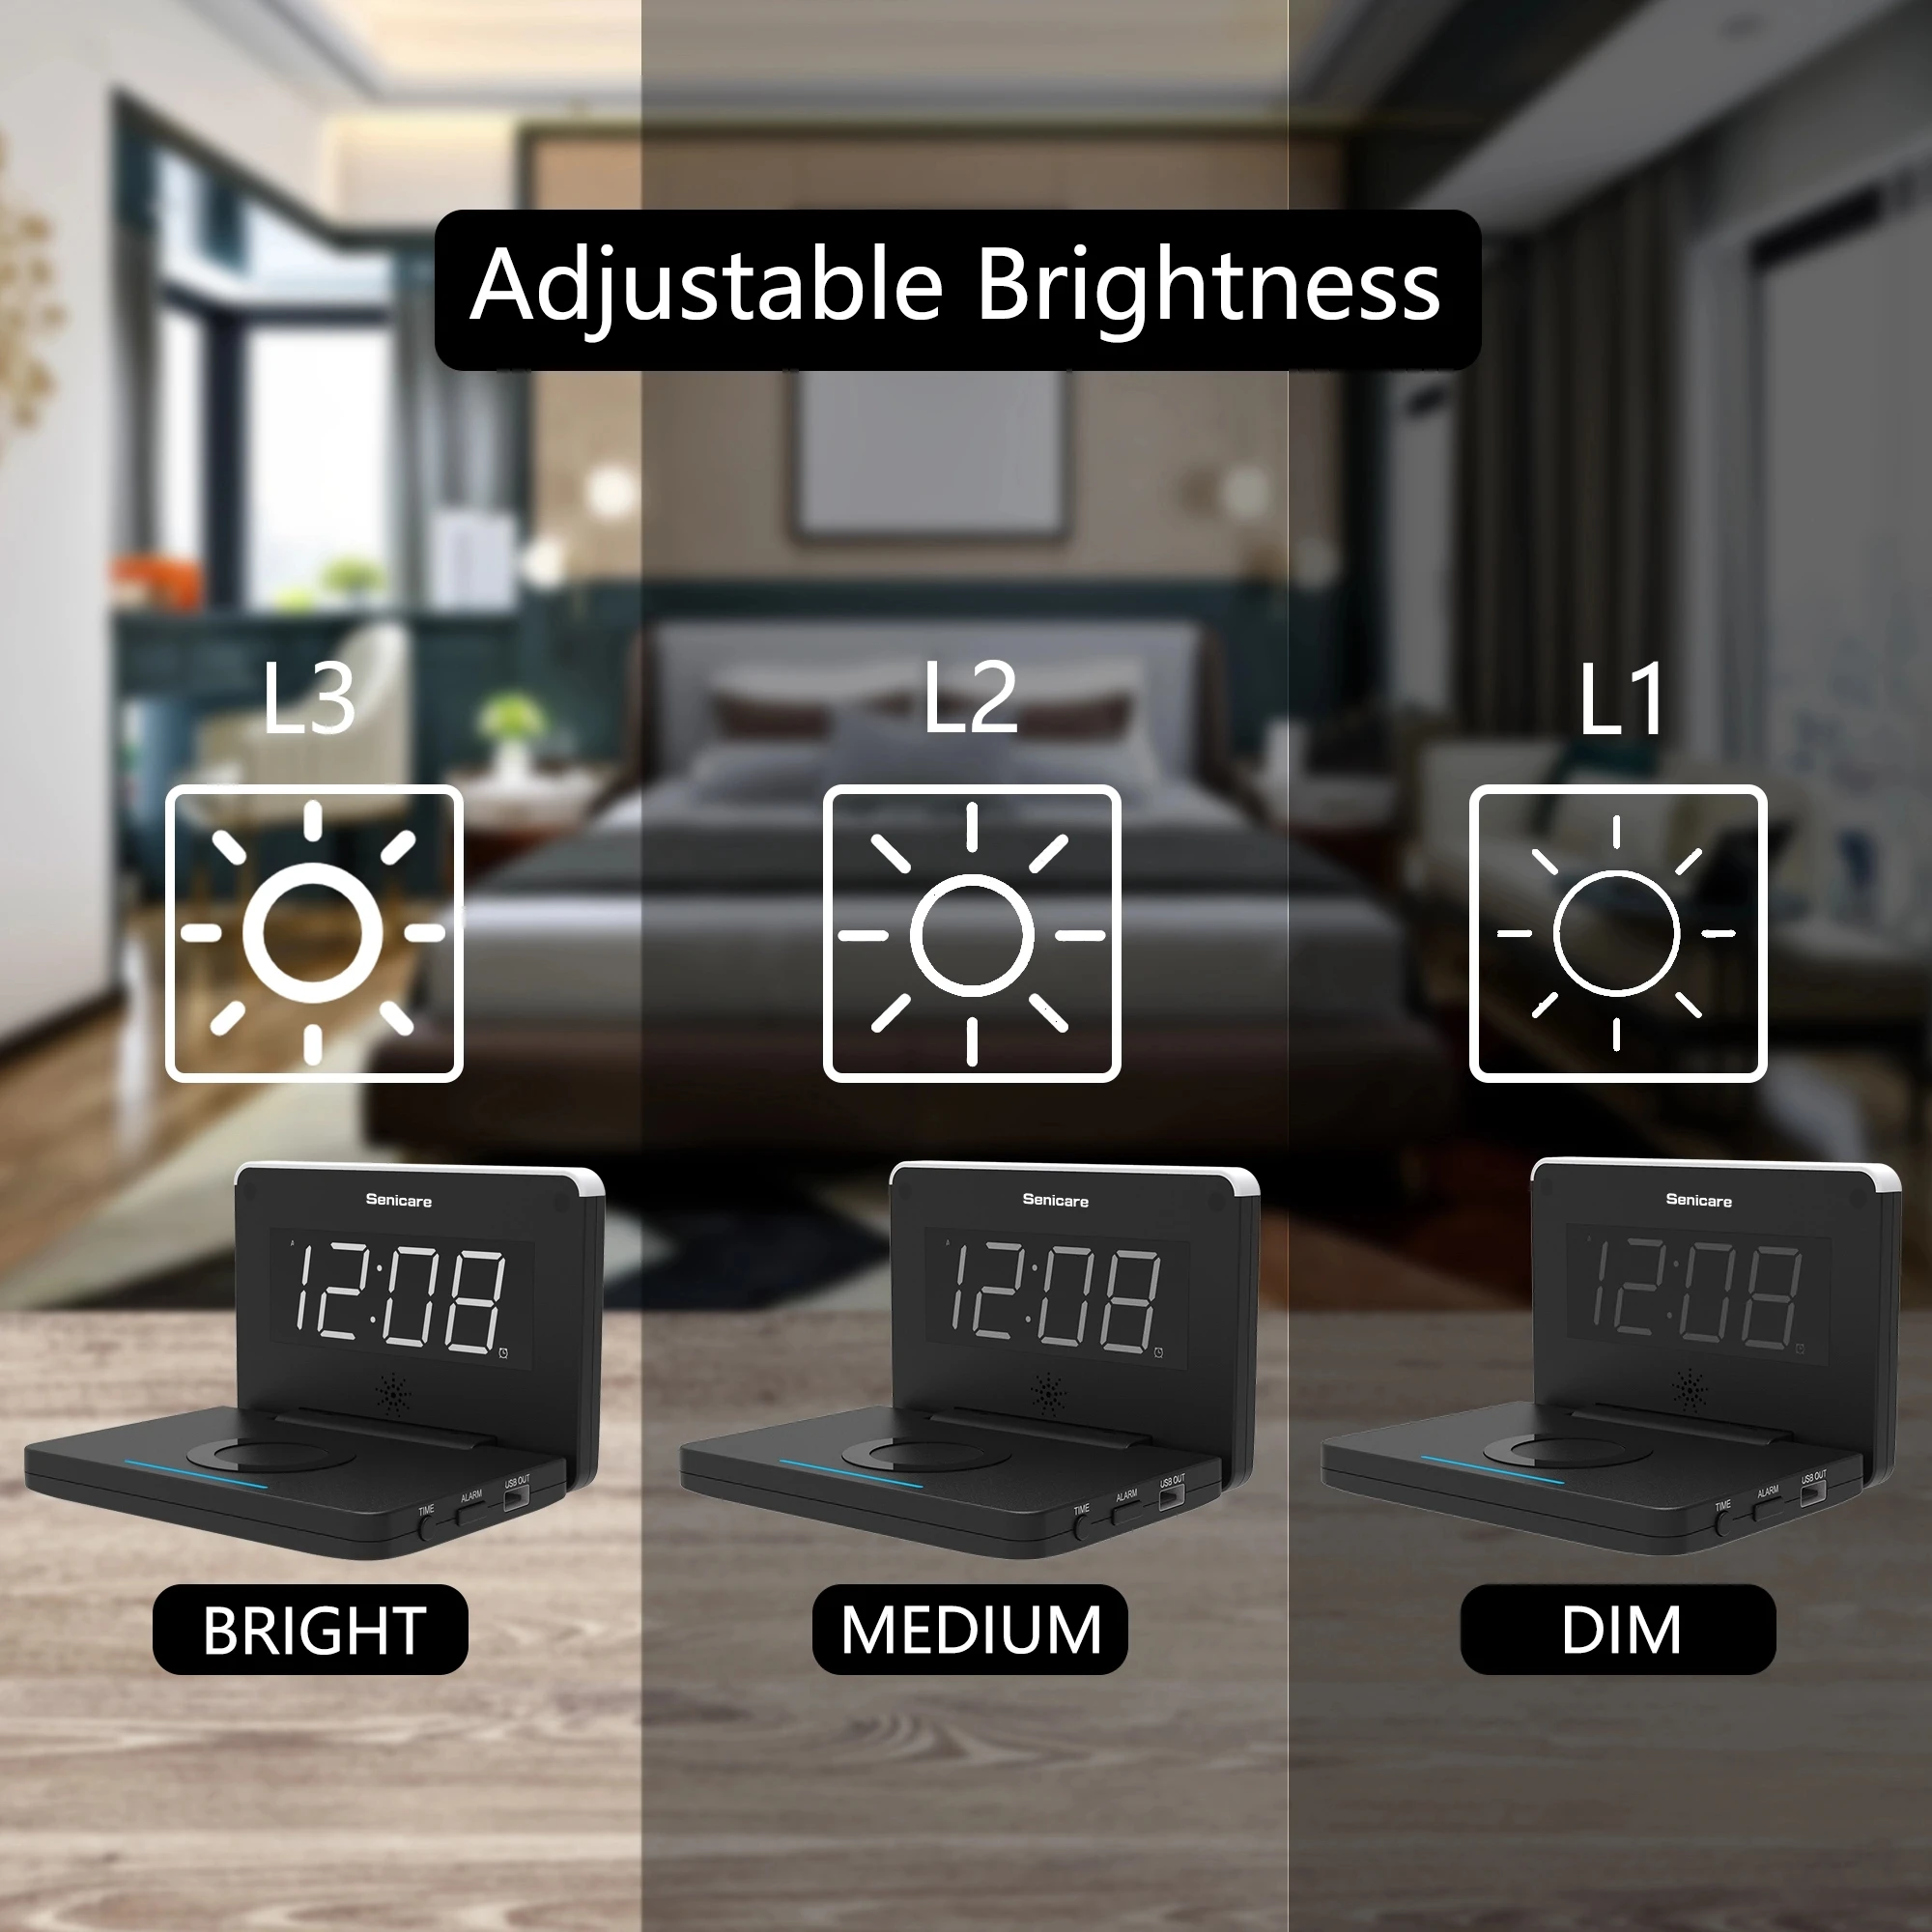 Room Bedside Alarm Clock High Quality Digital Alarm Clock With 10w Wireless Charging